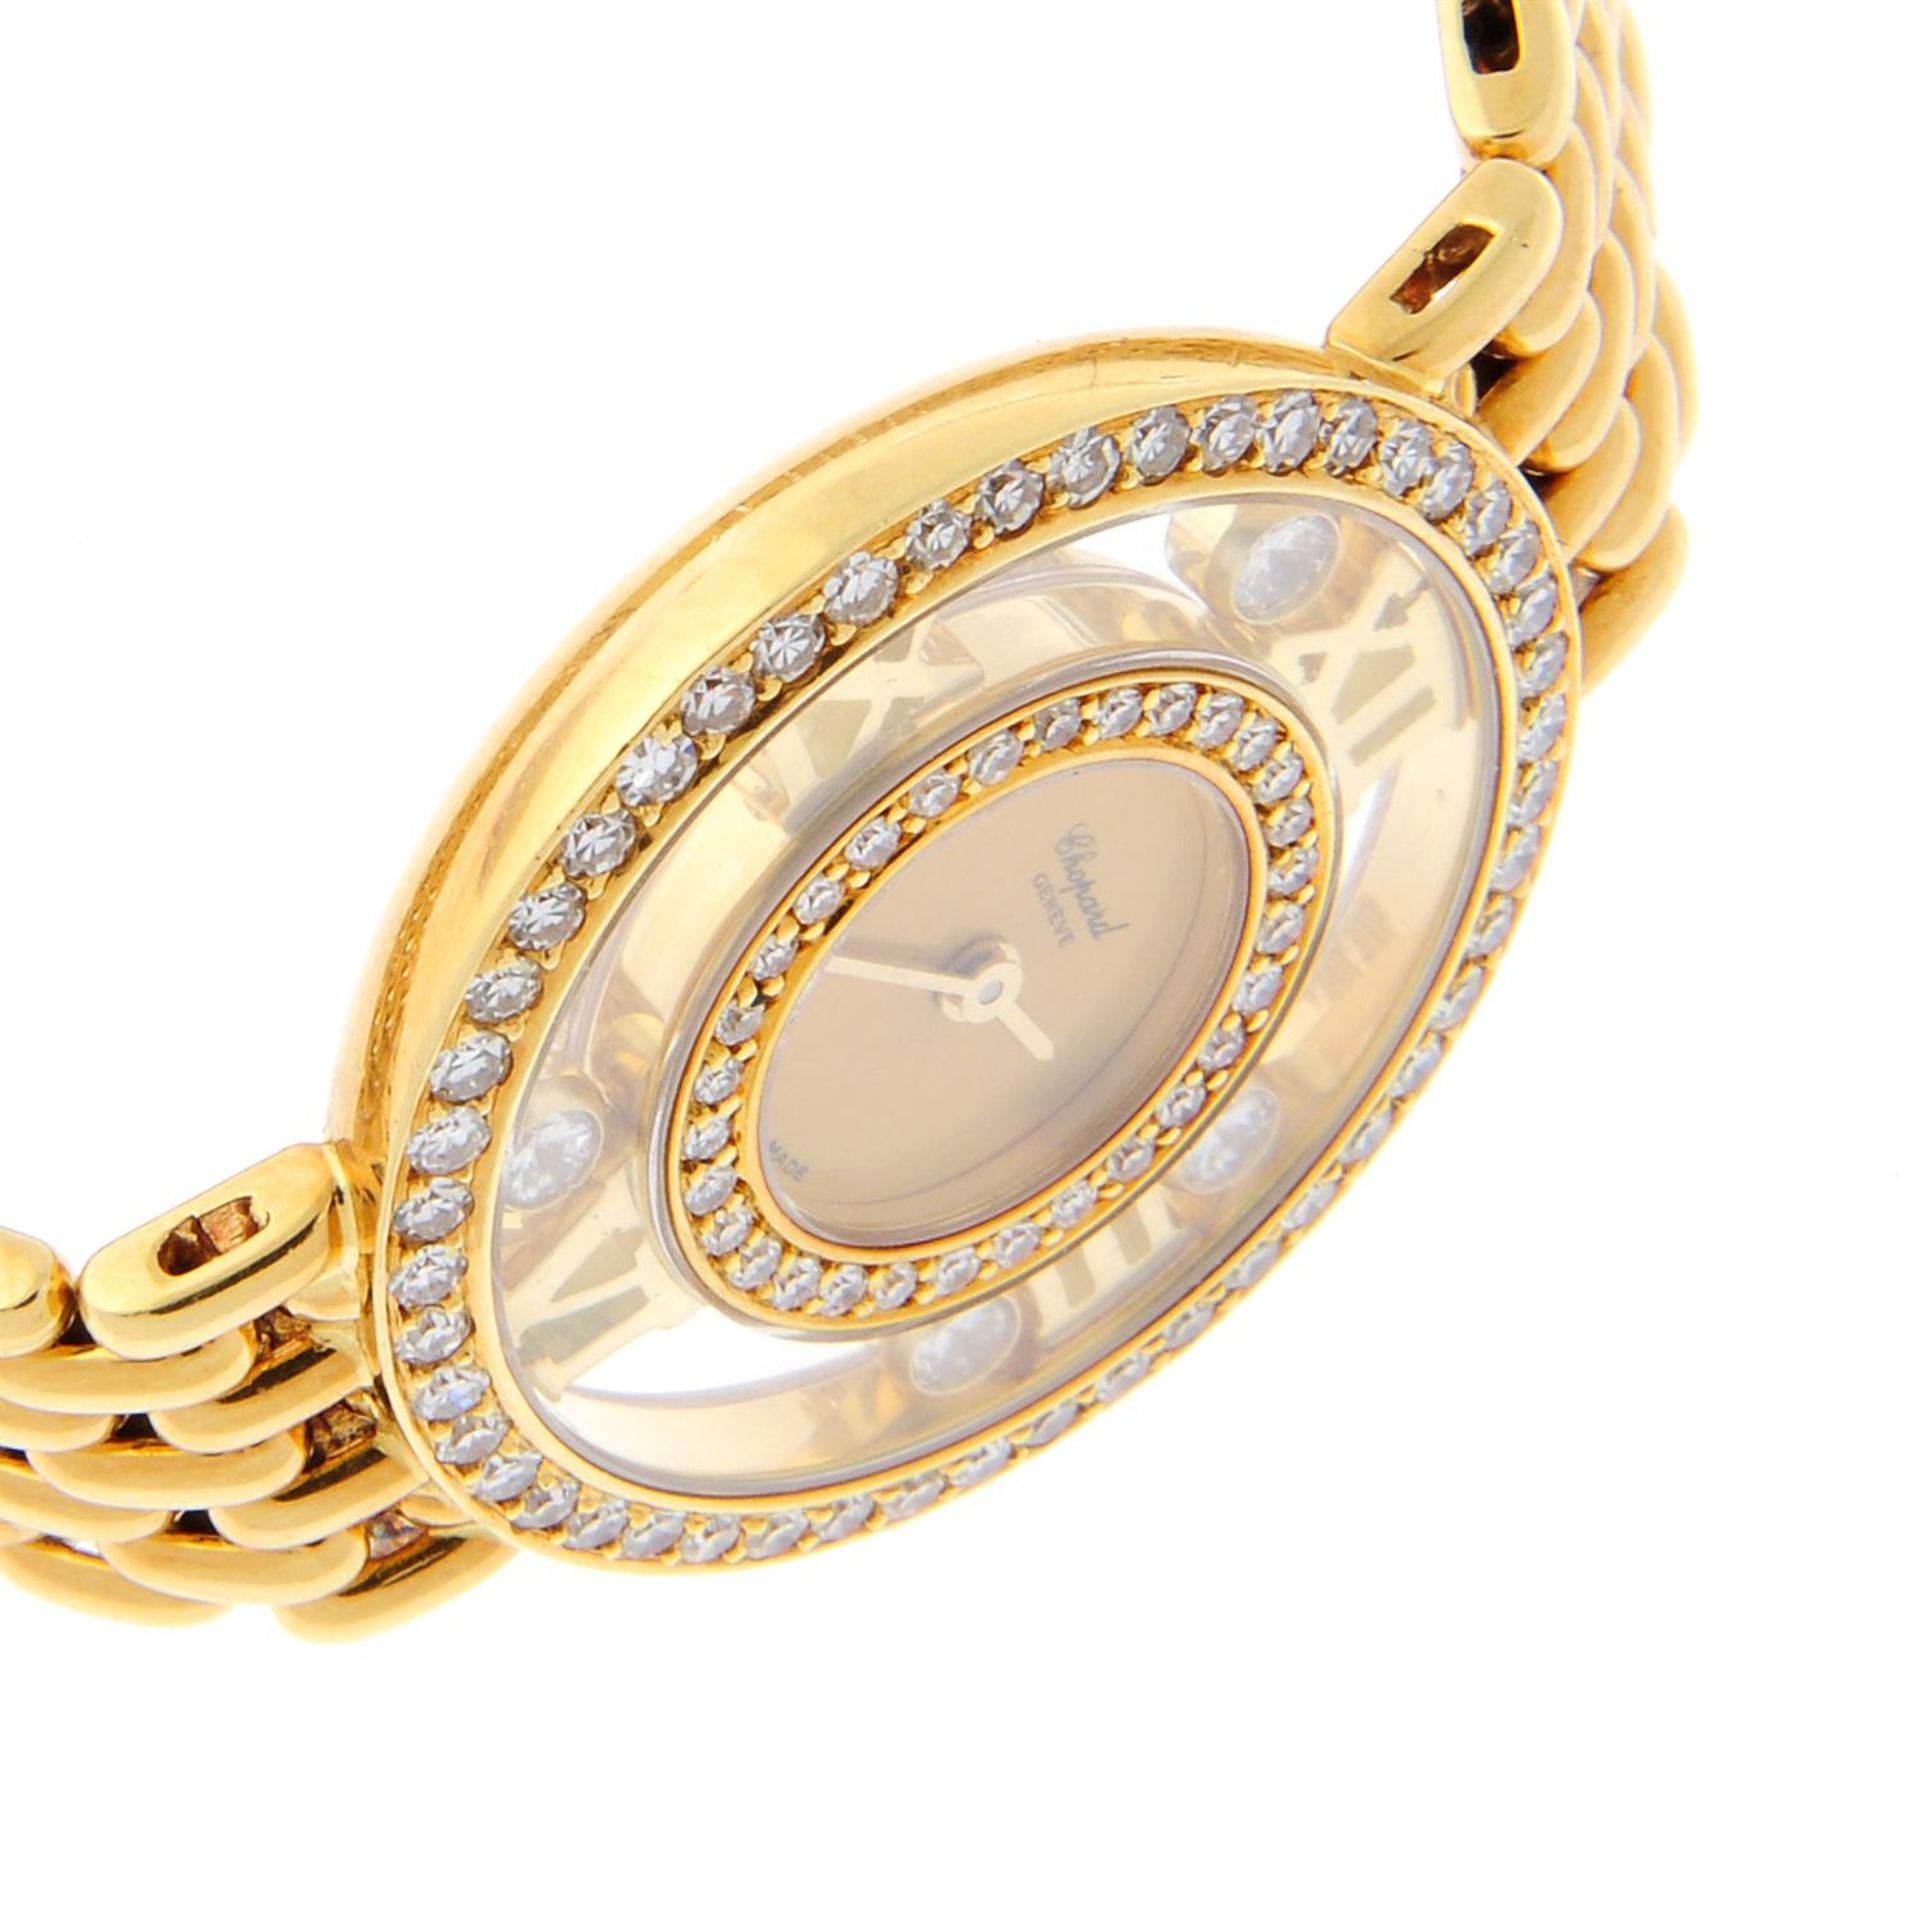 CHOPARD - a factory diamond set 18ct yellow gold Happy Diamonds bracelet watch, 24mm. - Bild 3 aus 5